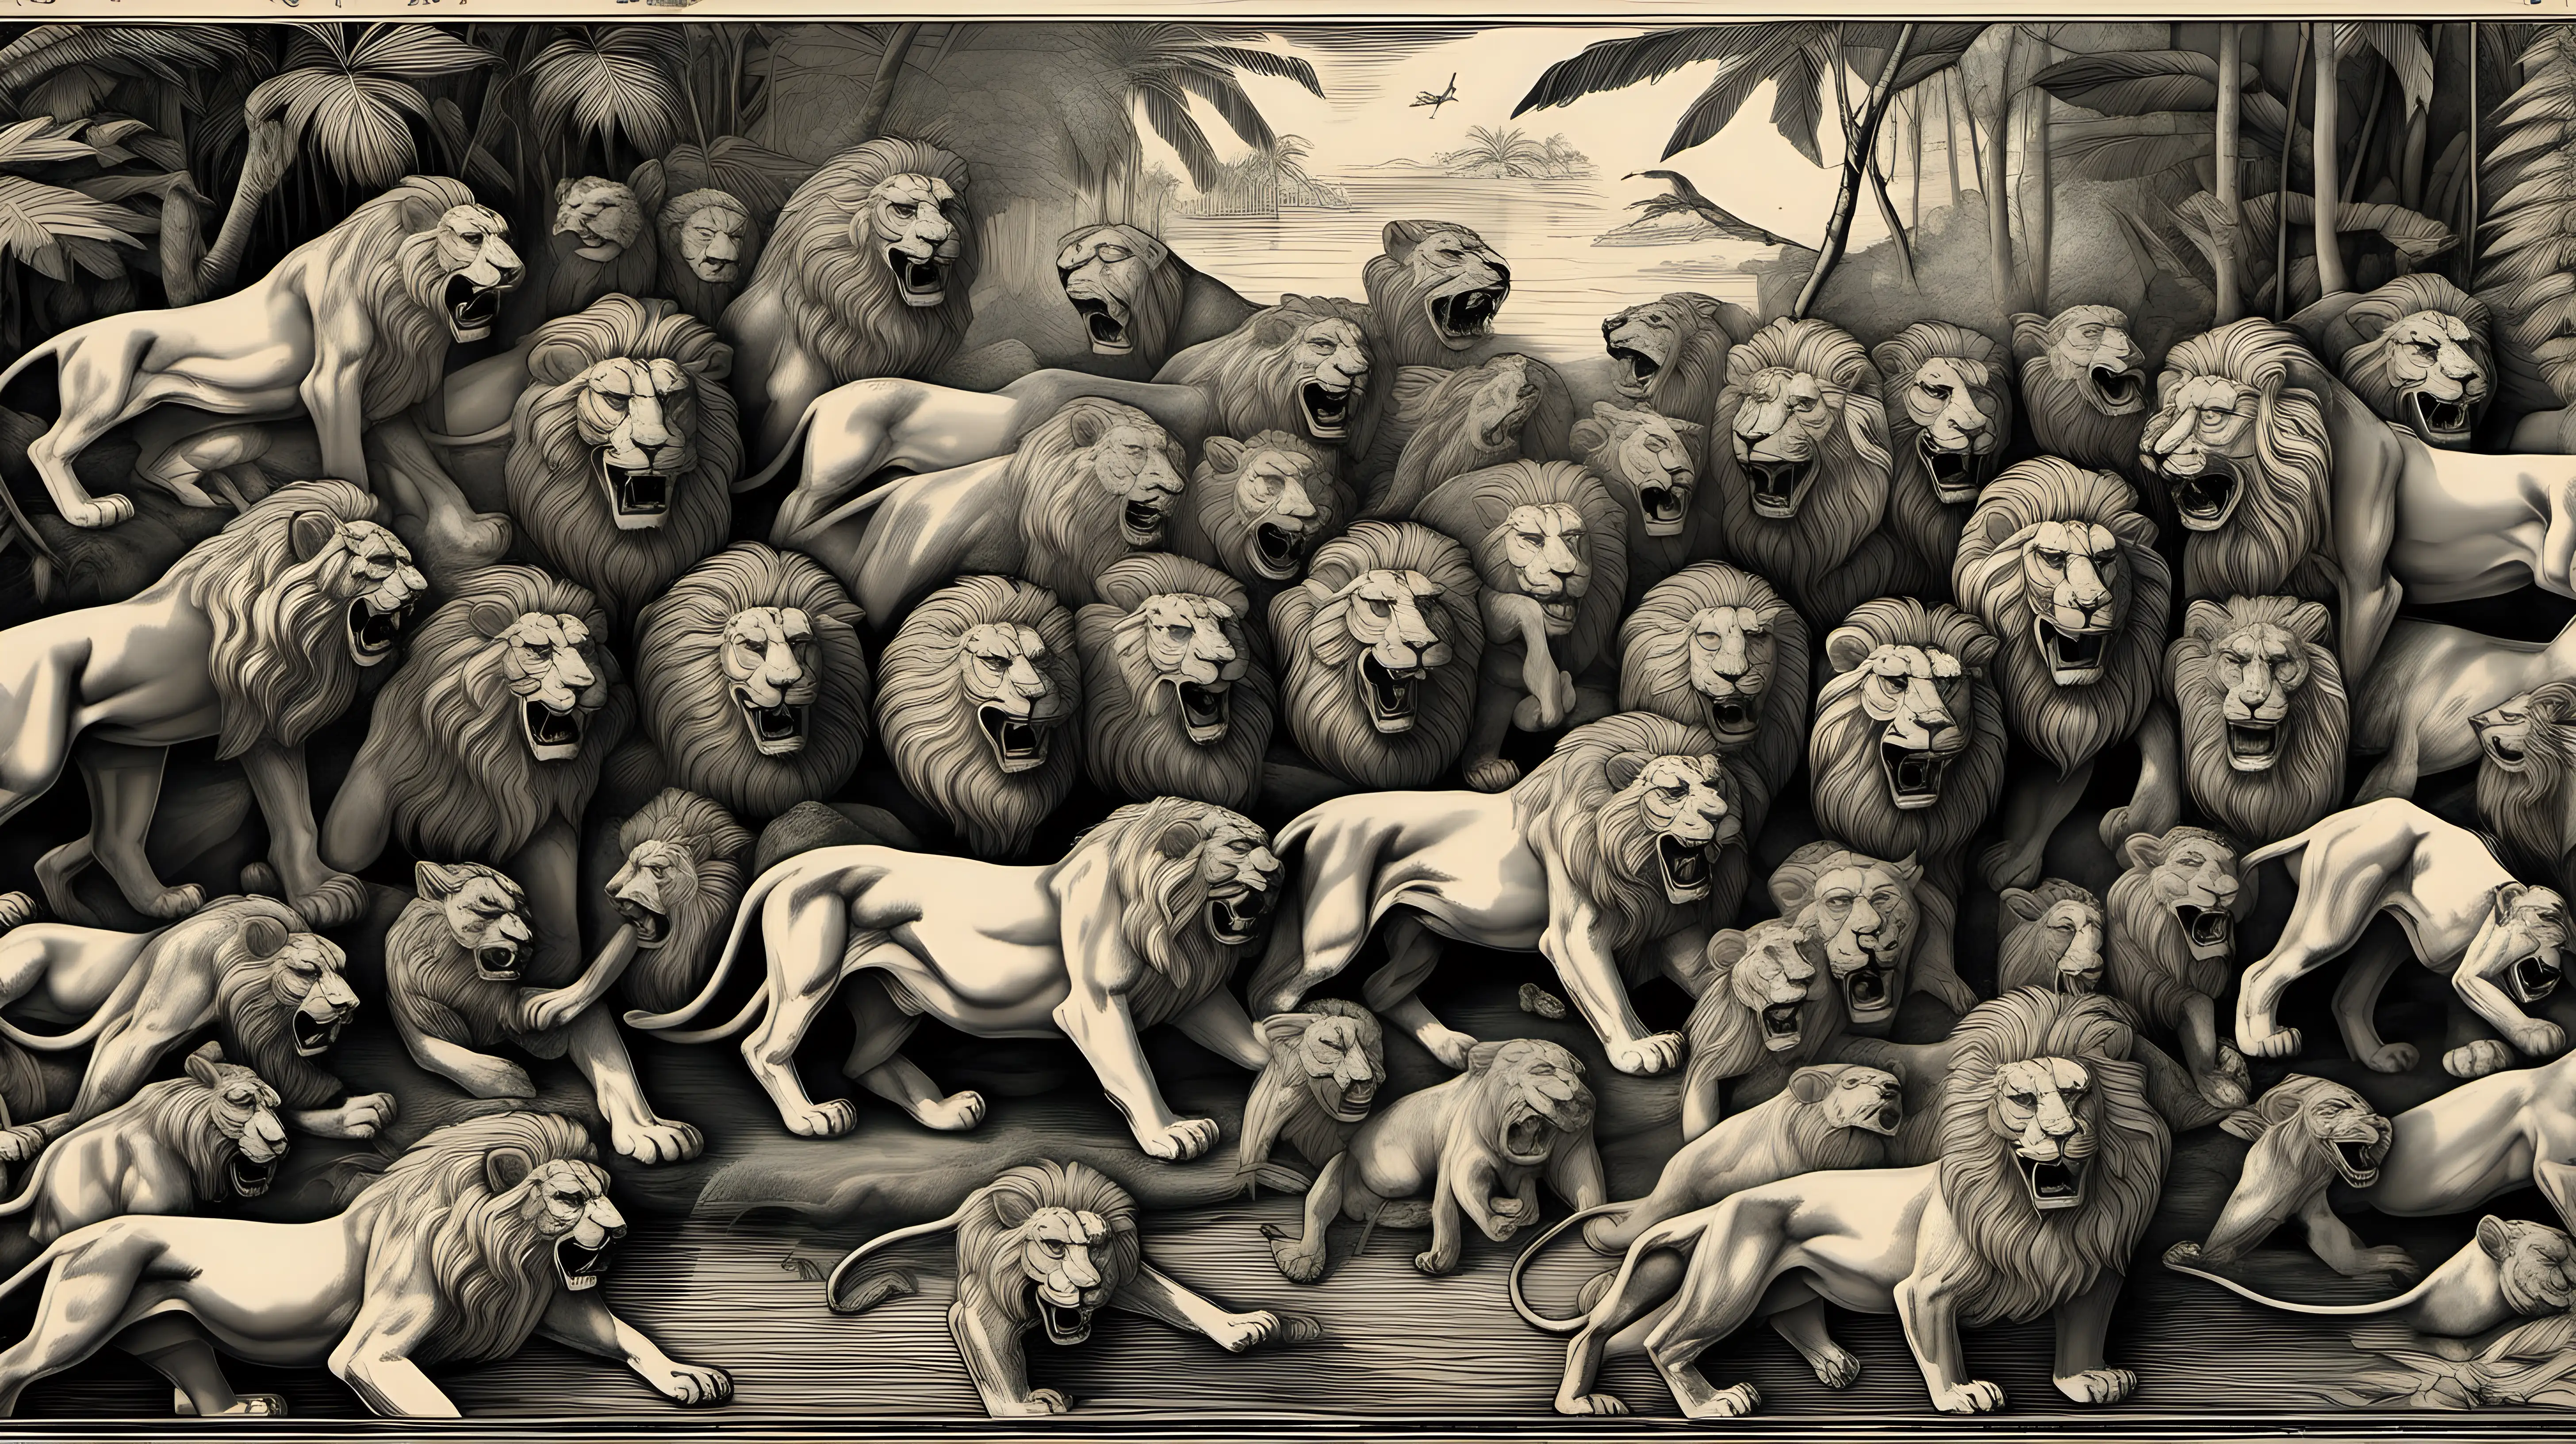 Roaring Lionheaded Figures in 16th Century Jungle Engraving